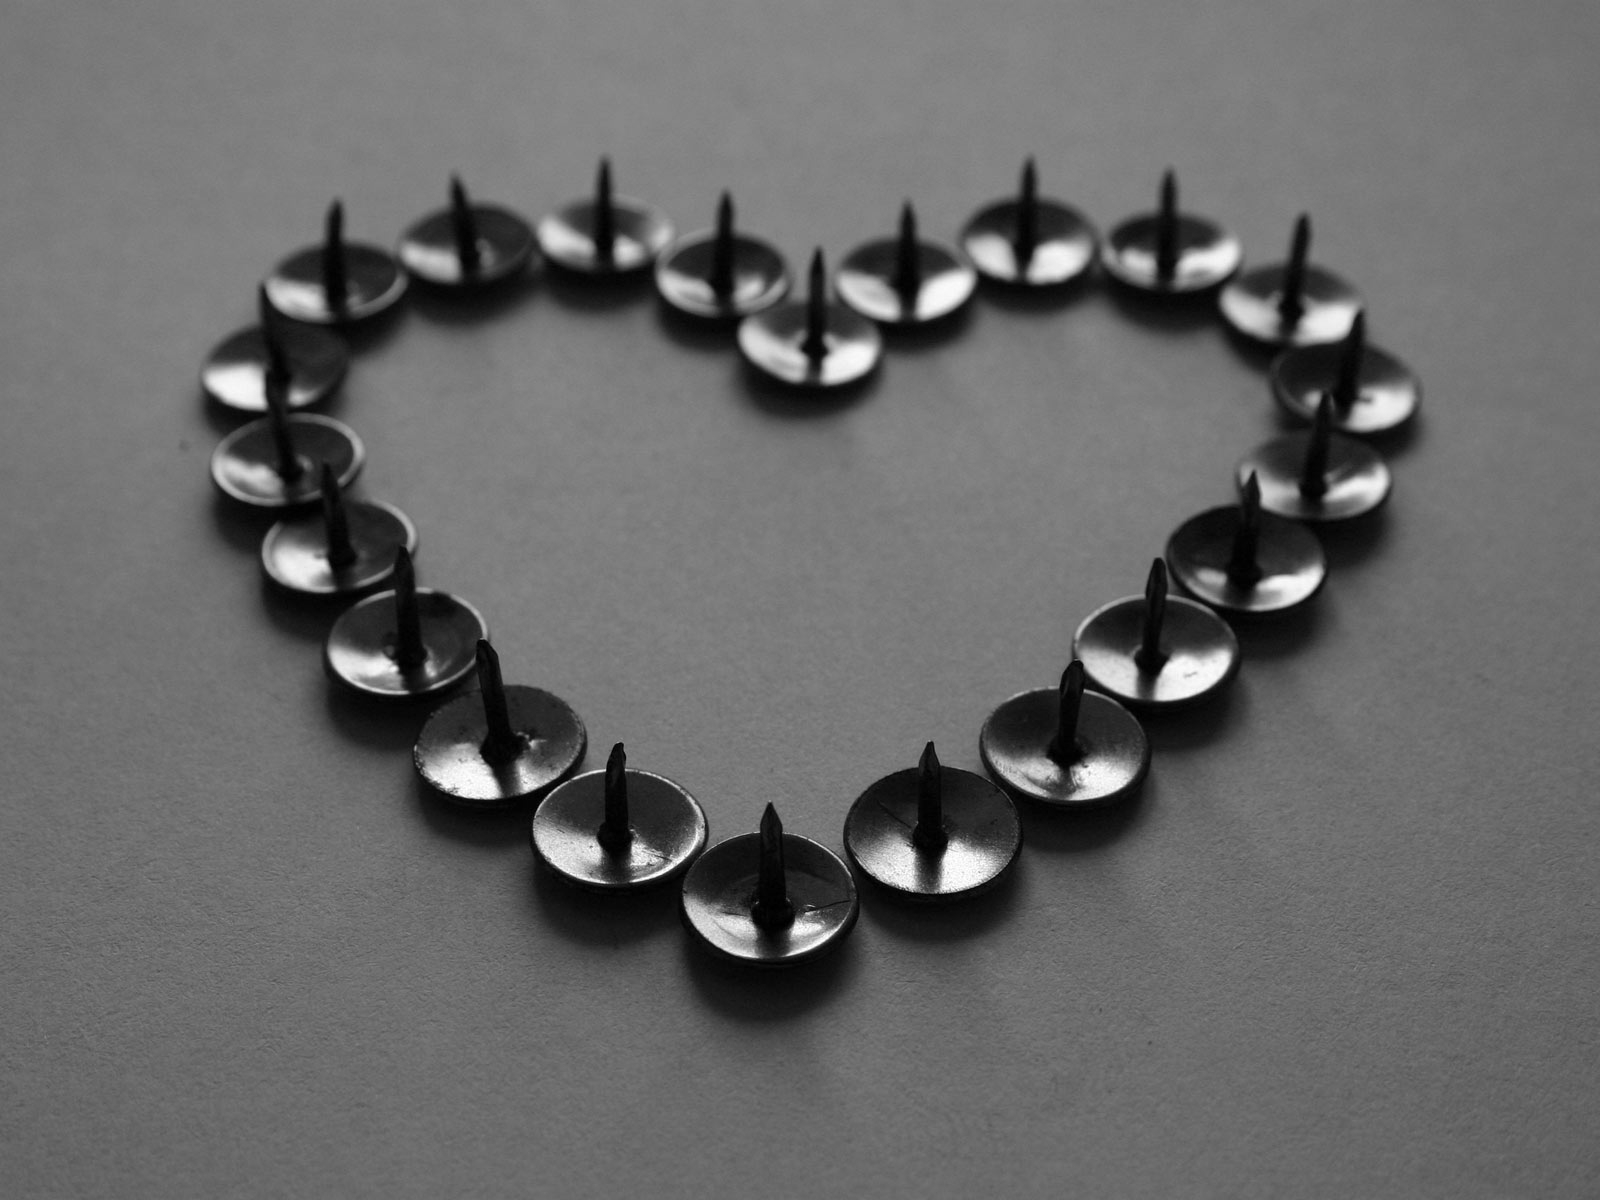 Heart-shaped thumbtacks